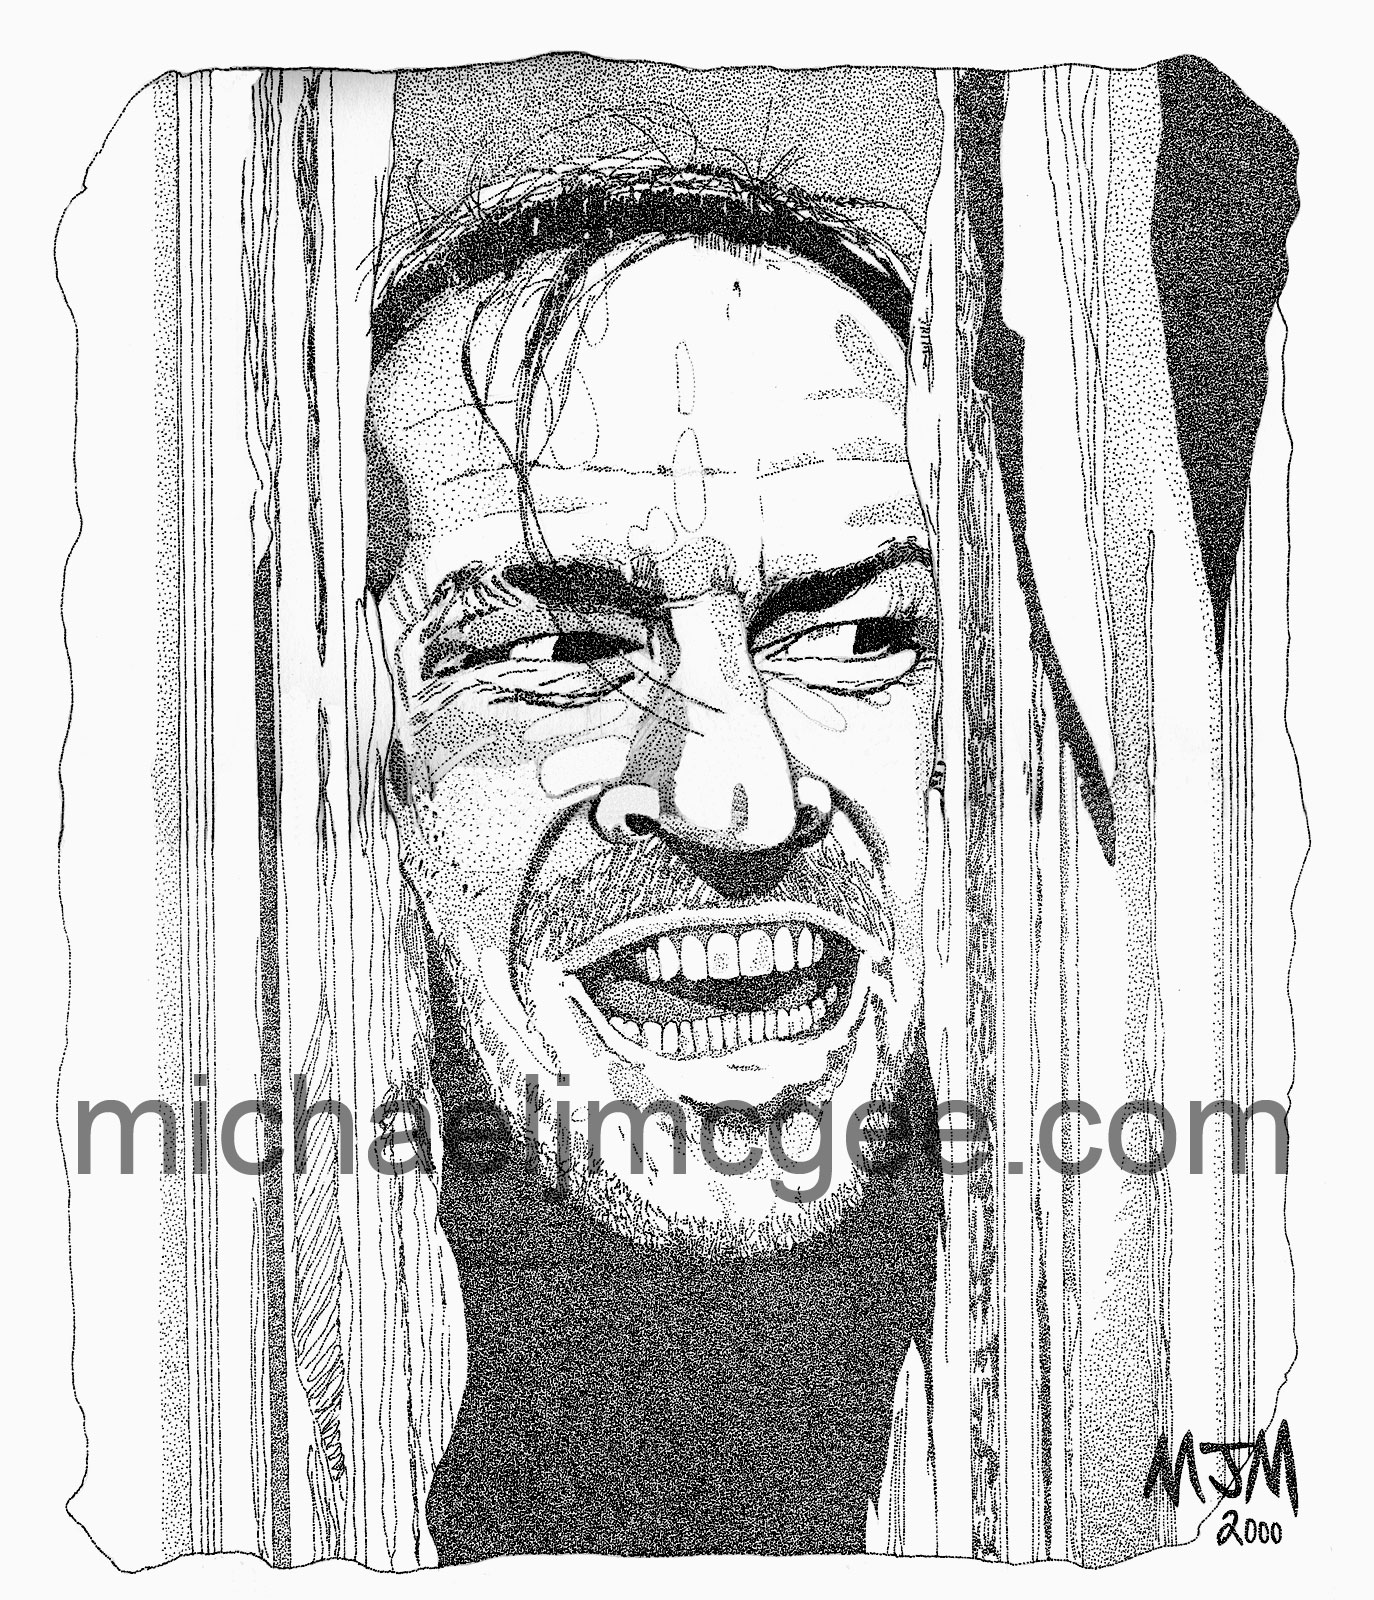 Jack Nicholson / MJM Artworks / michaeljmcgee.com